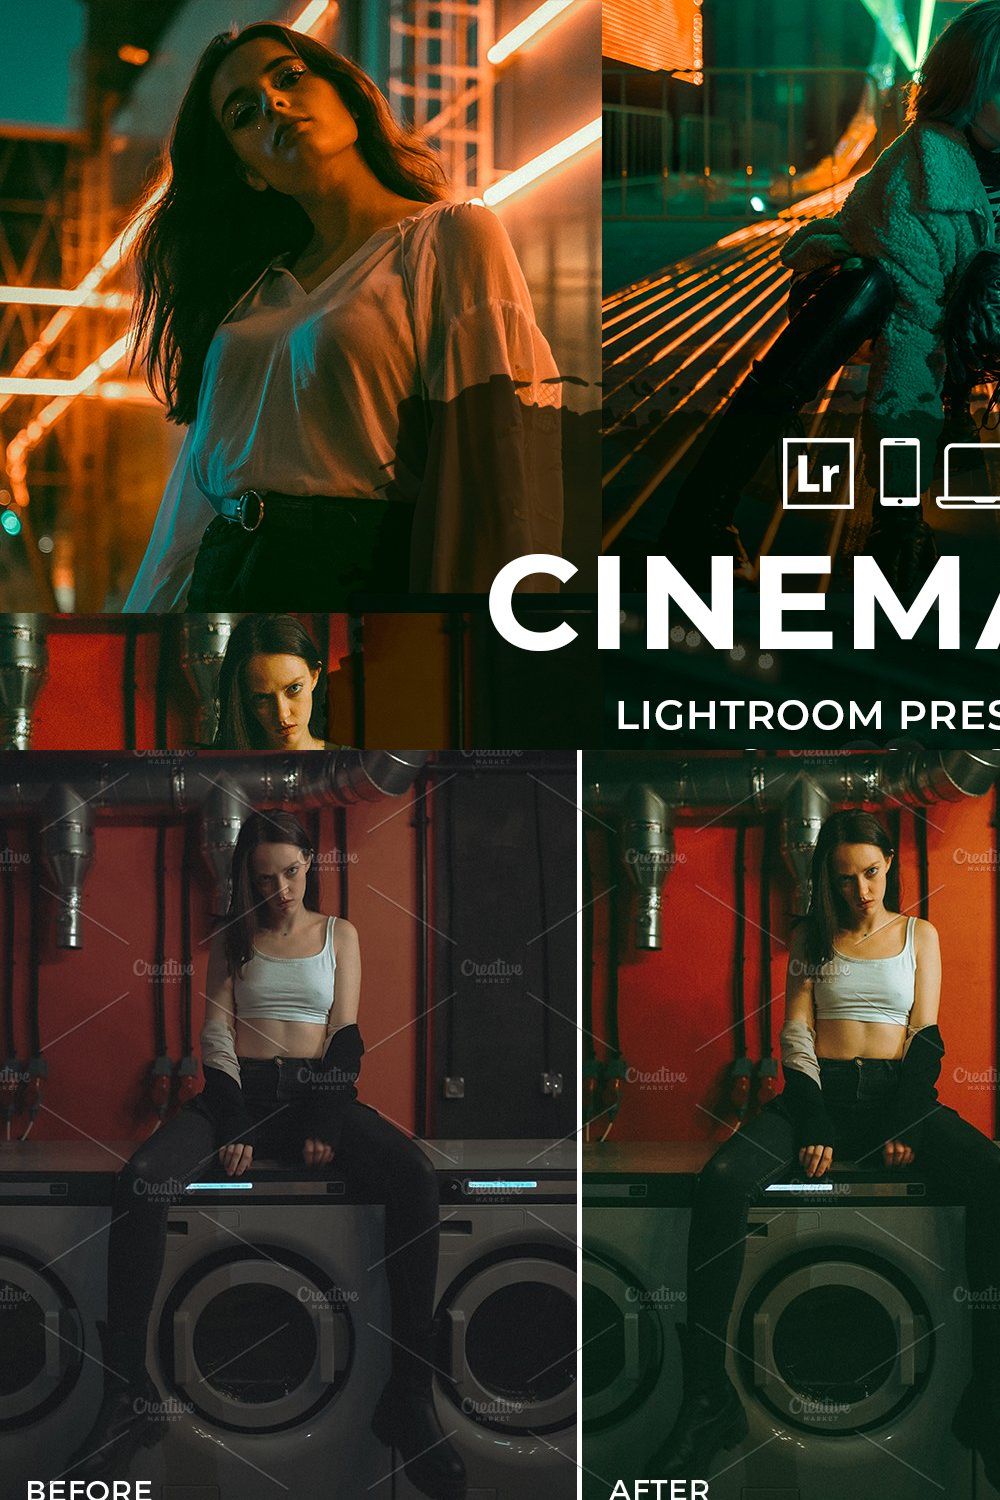 Cinematic Lightroom Presets pinterest preview image.